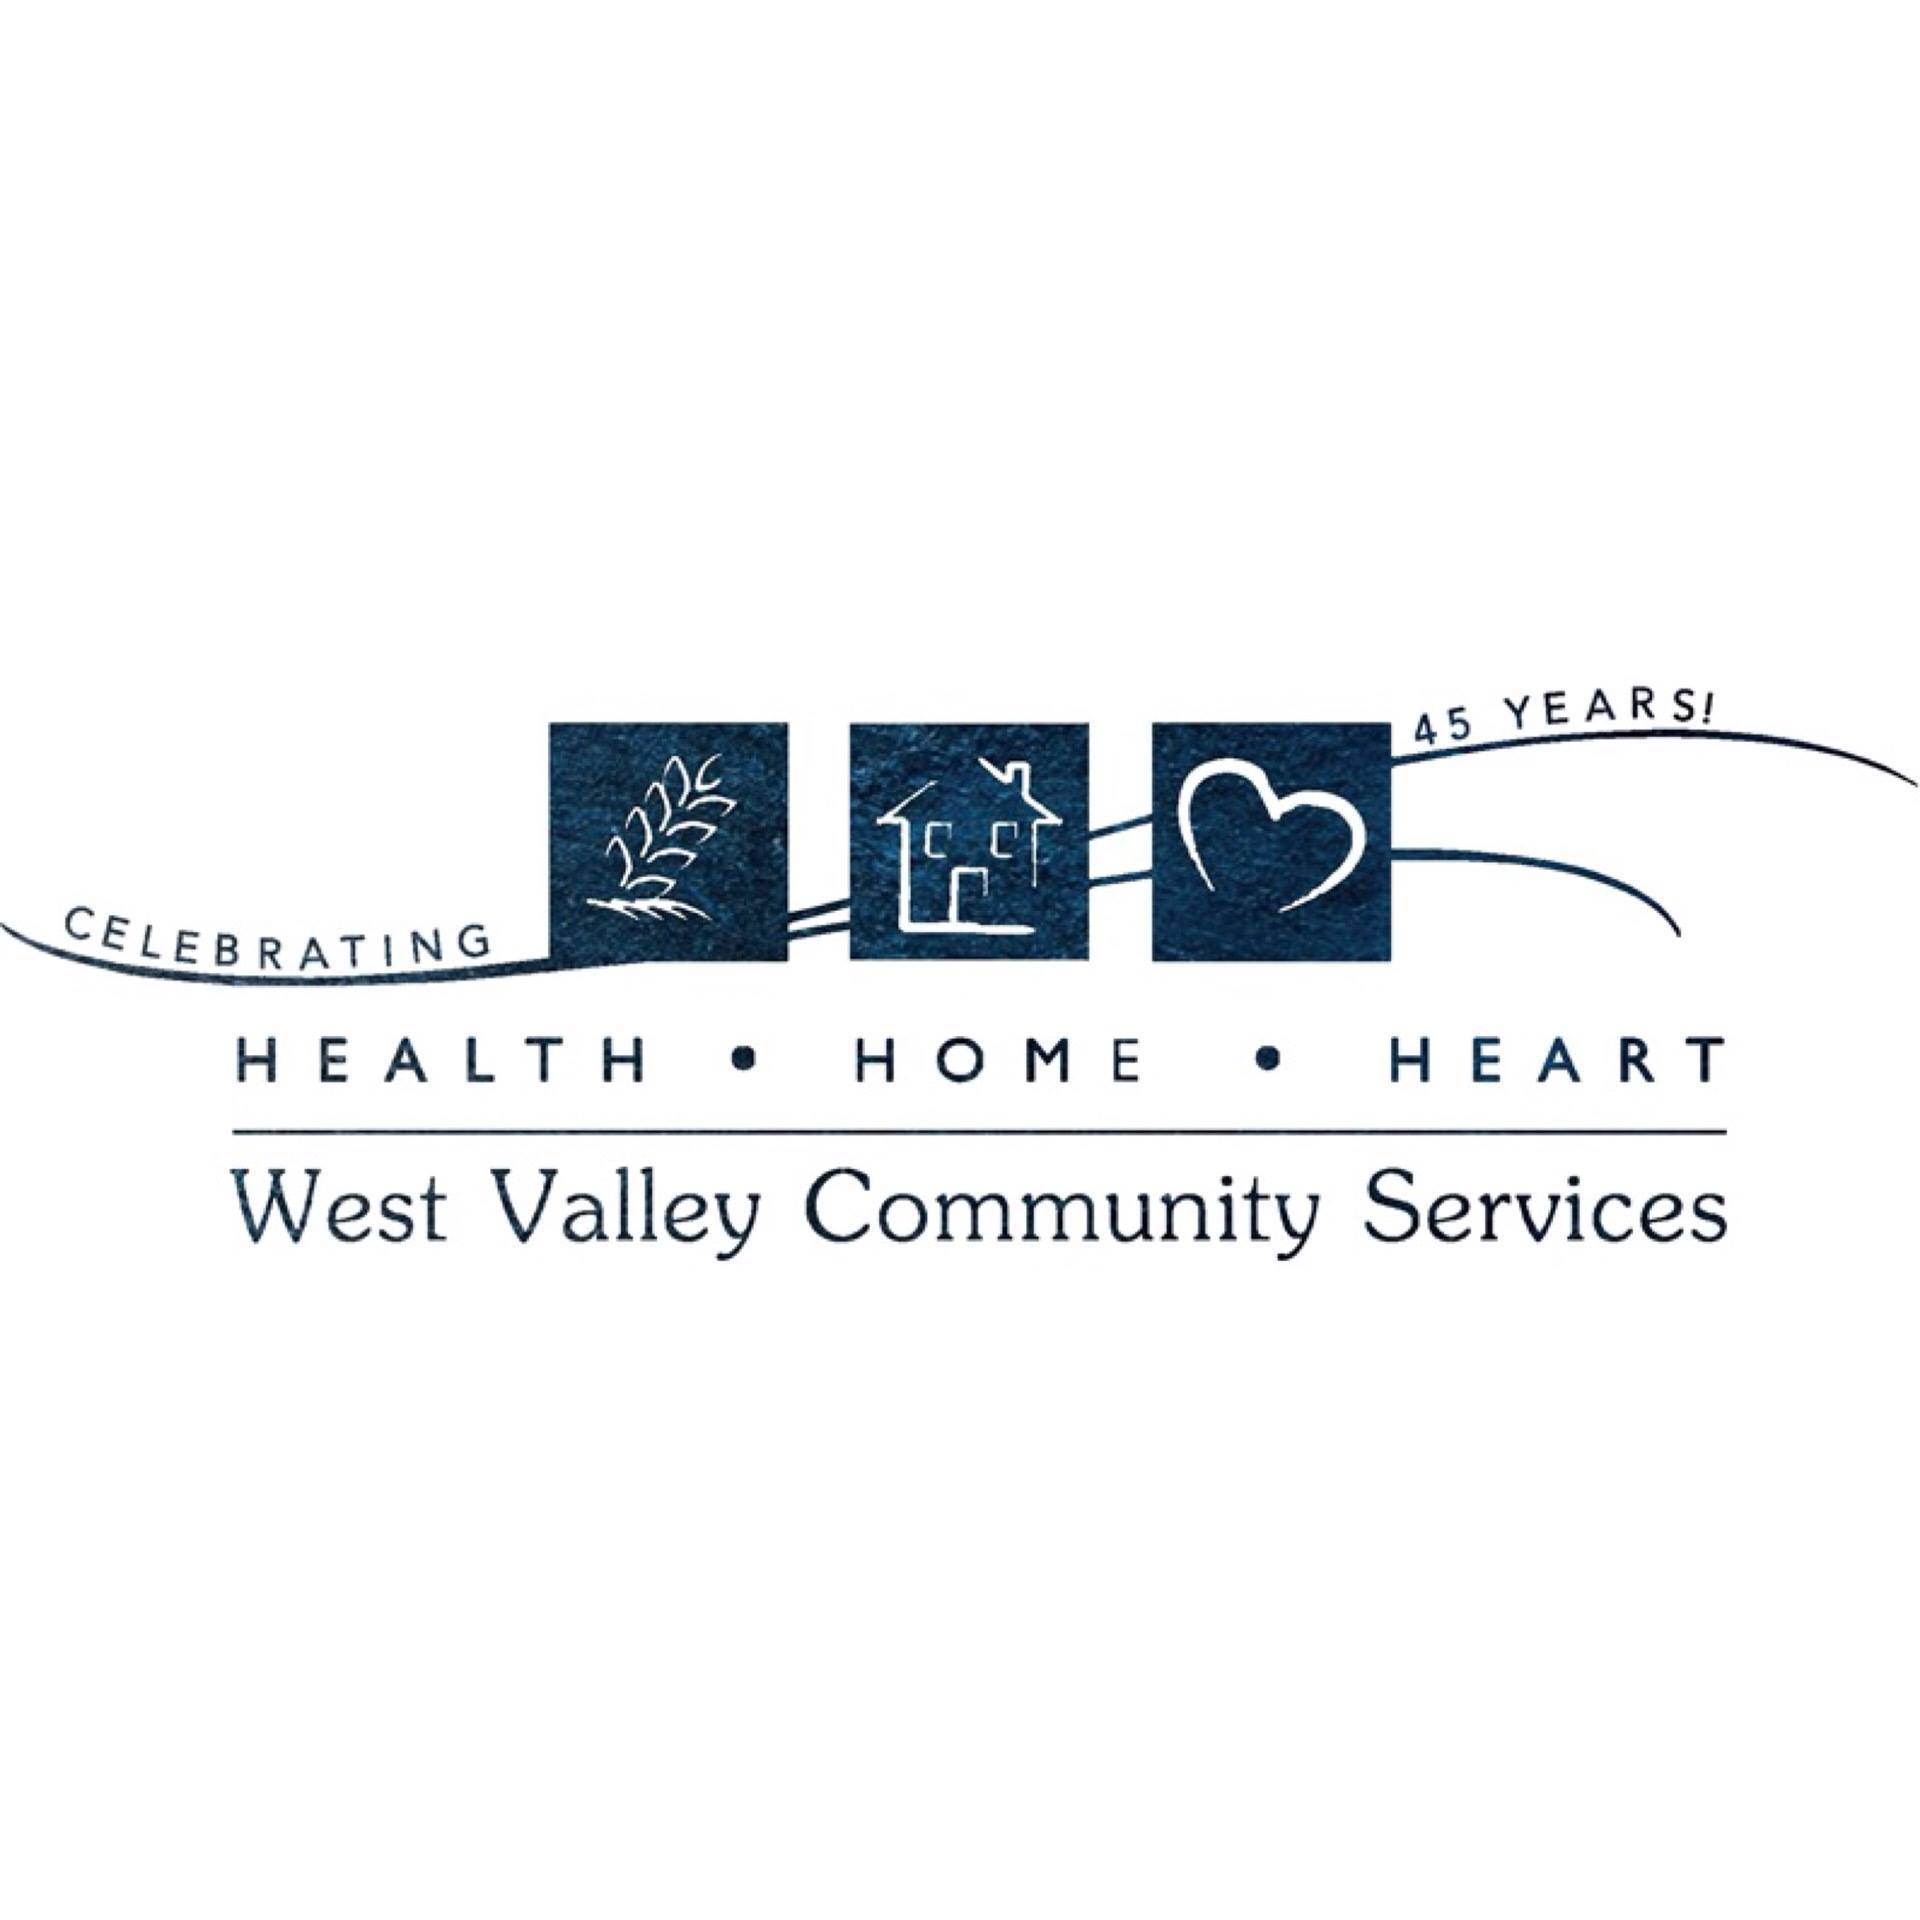 West Valley Community Services Of Santa Clara County, Inc.